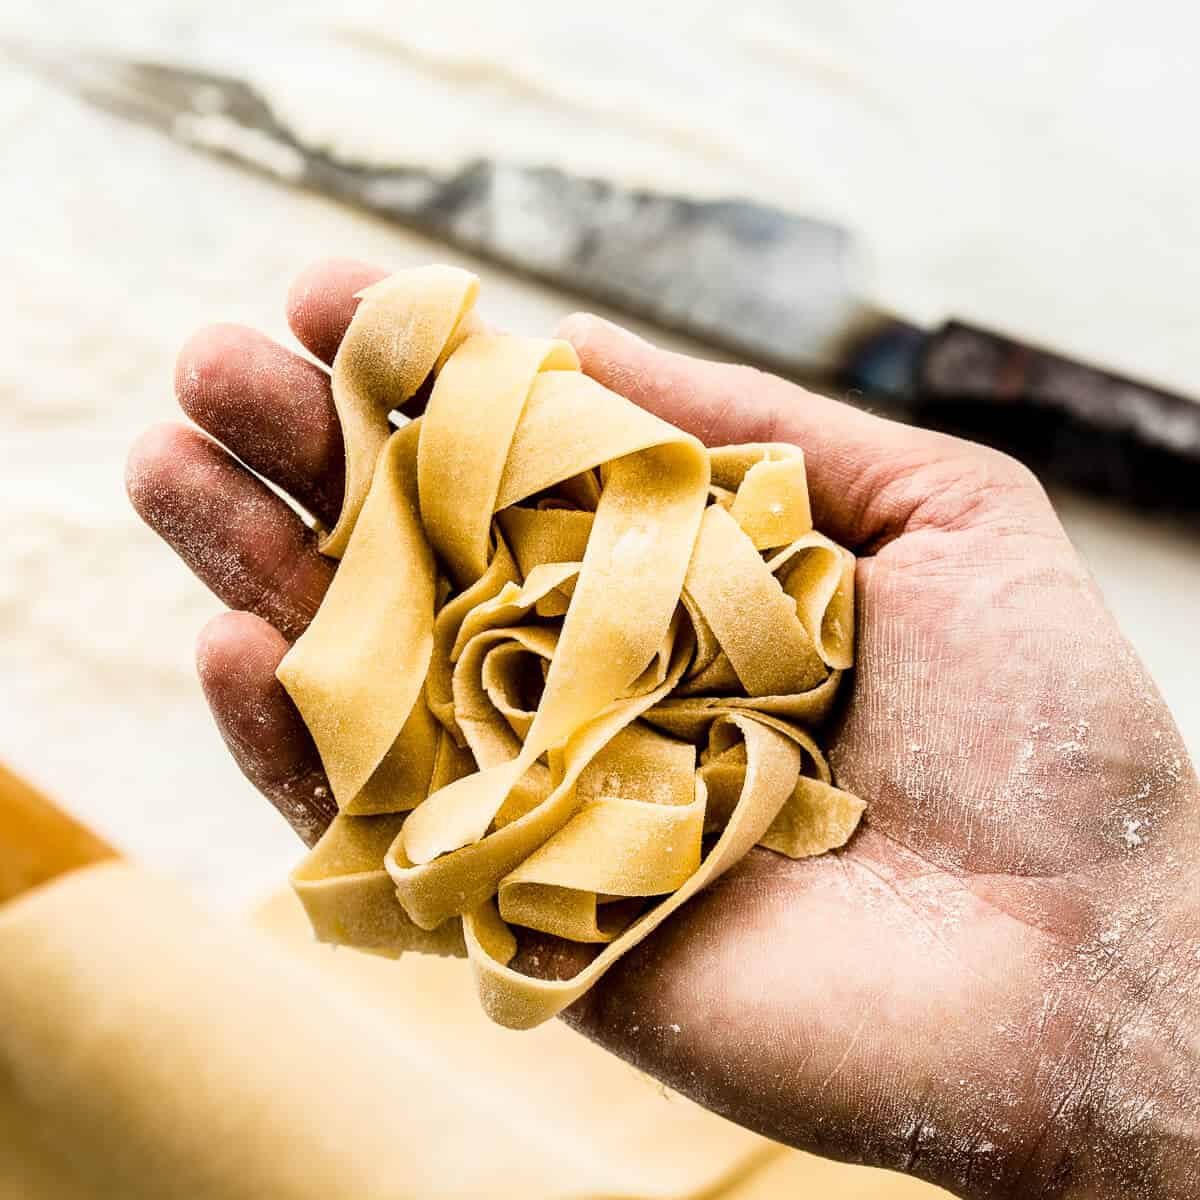 https://www.pantsdownapronson.com/wp-content/uploads/how-to-make-fresh-pasta-dough-18.jpg